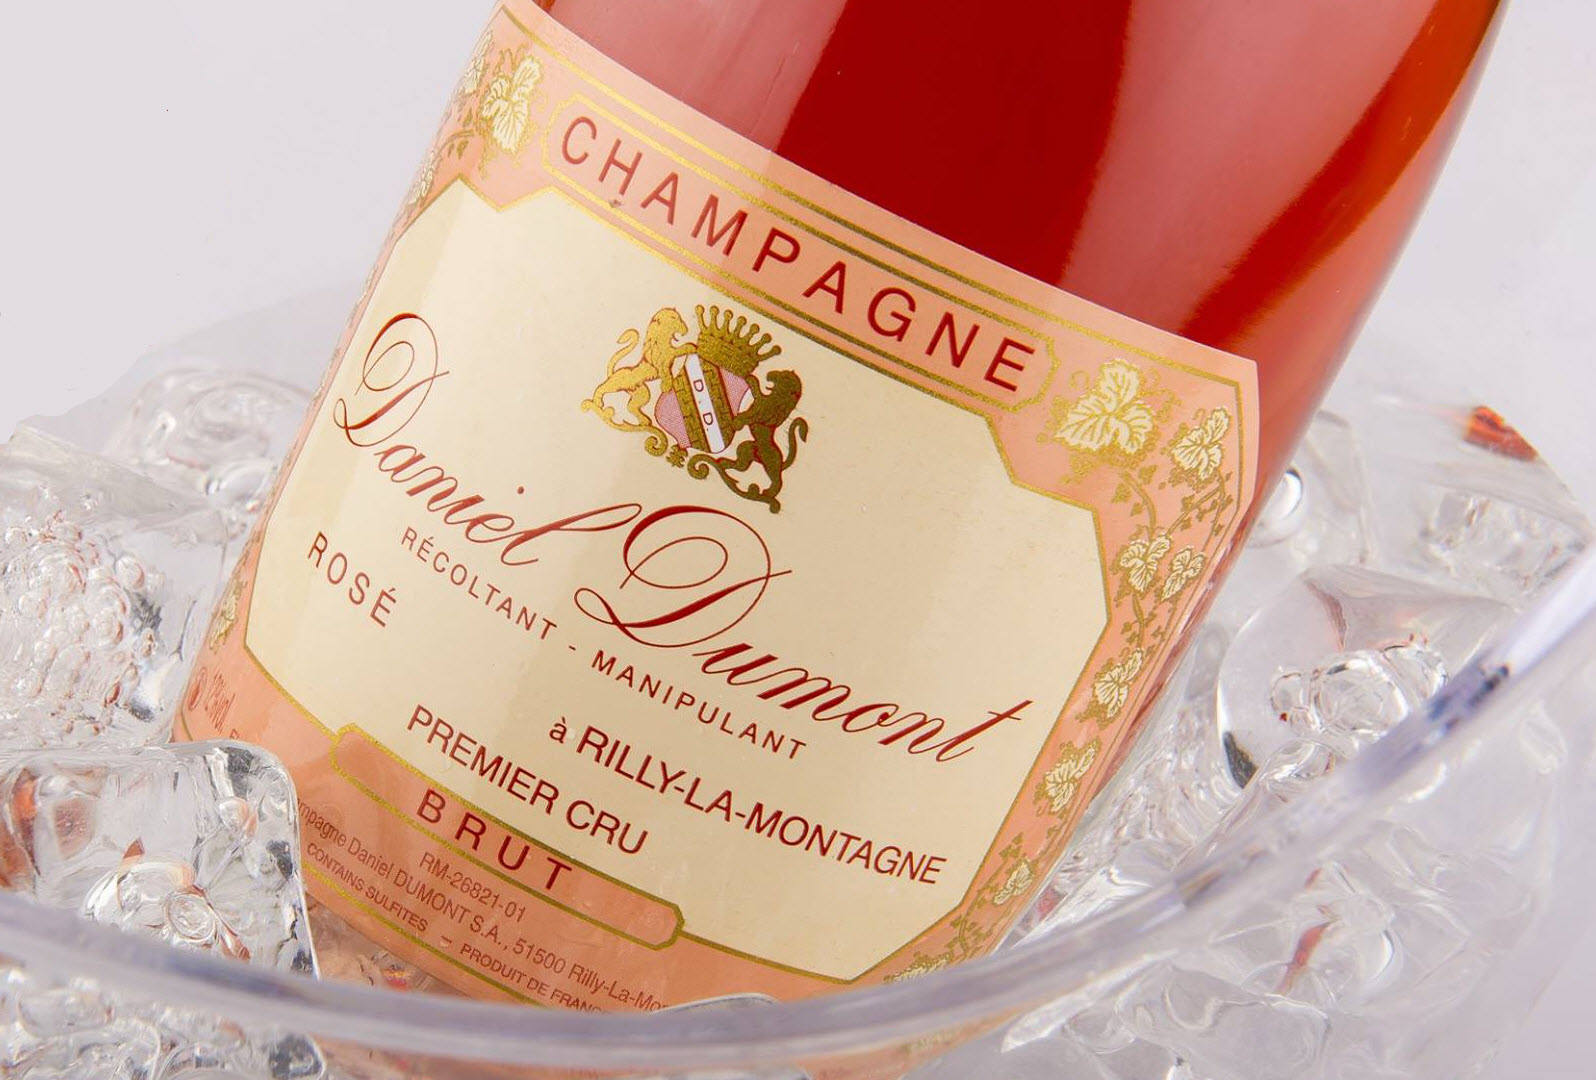 Champagne Daniel Dumont